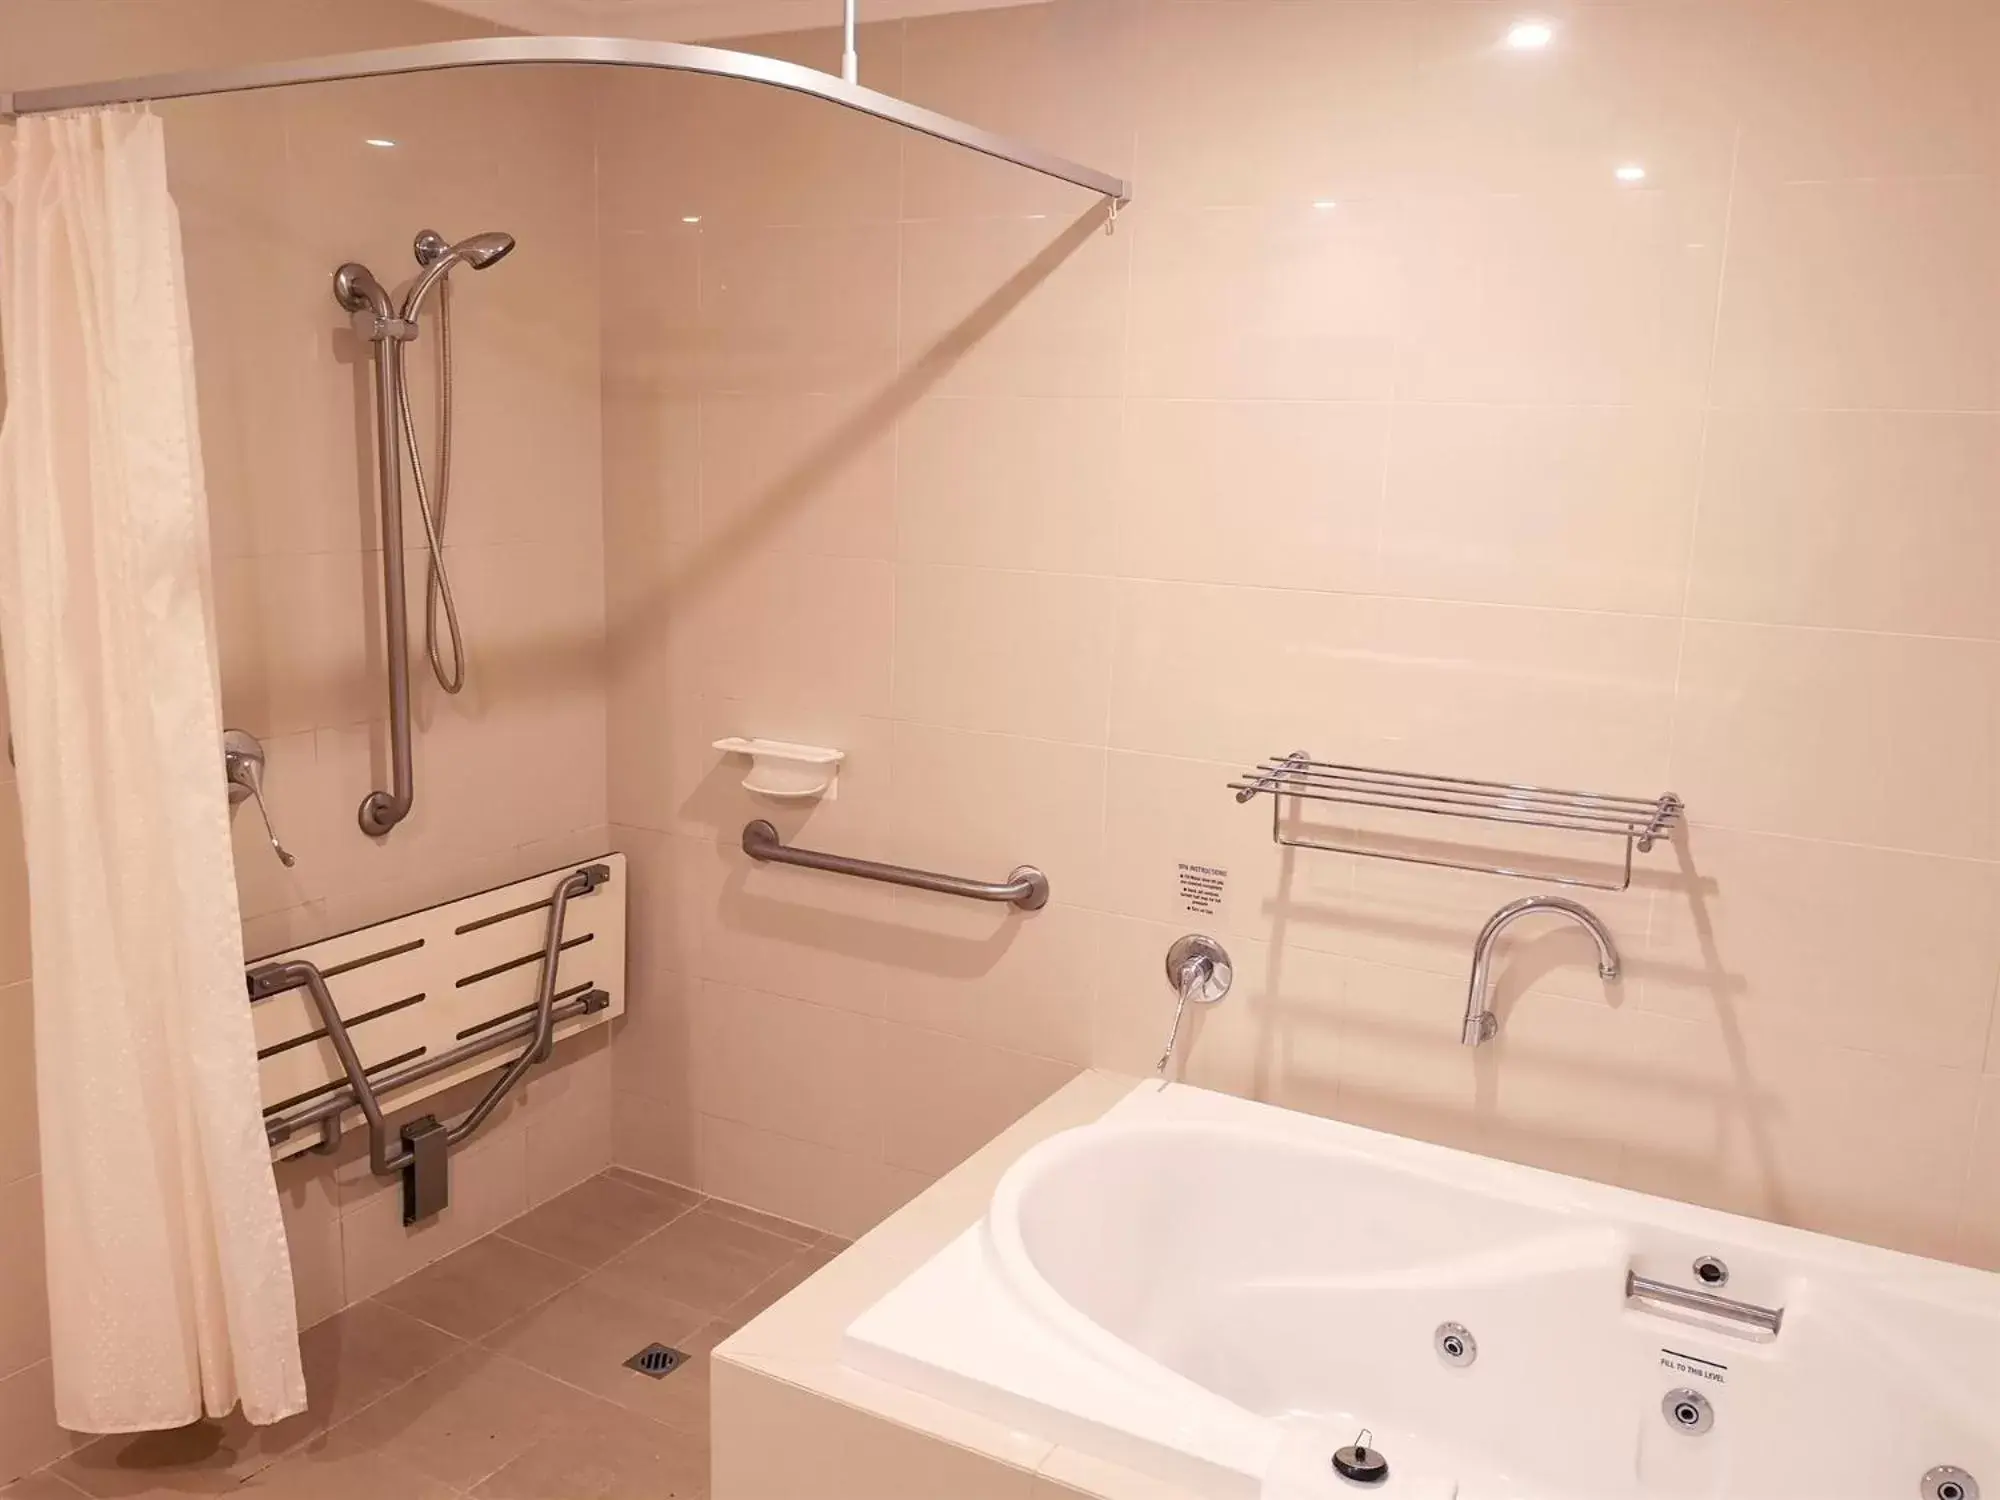 Facility for disabled guests, Bathroom in Bunbury Hotel Koombana Bay